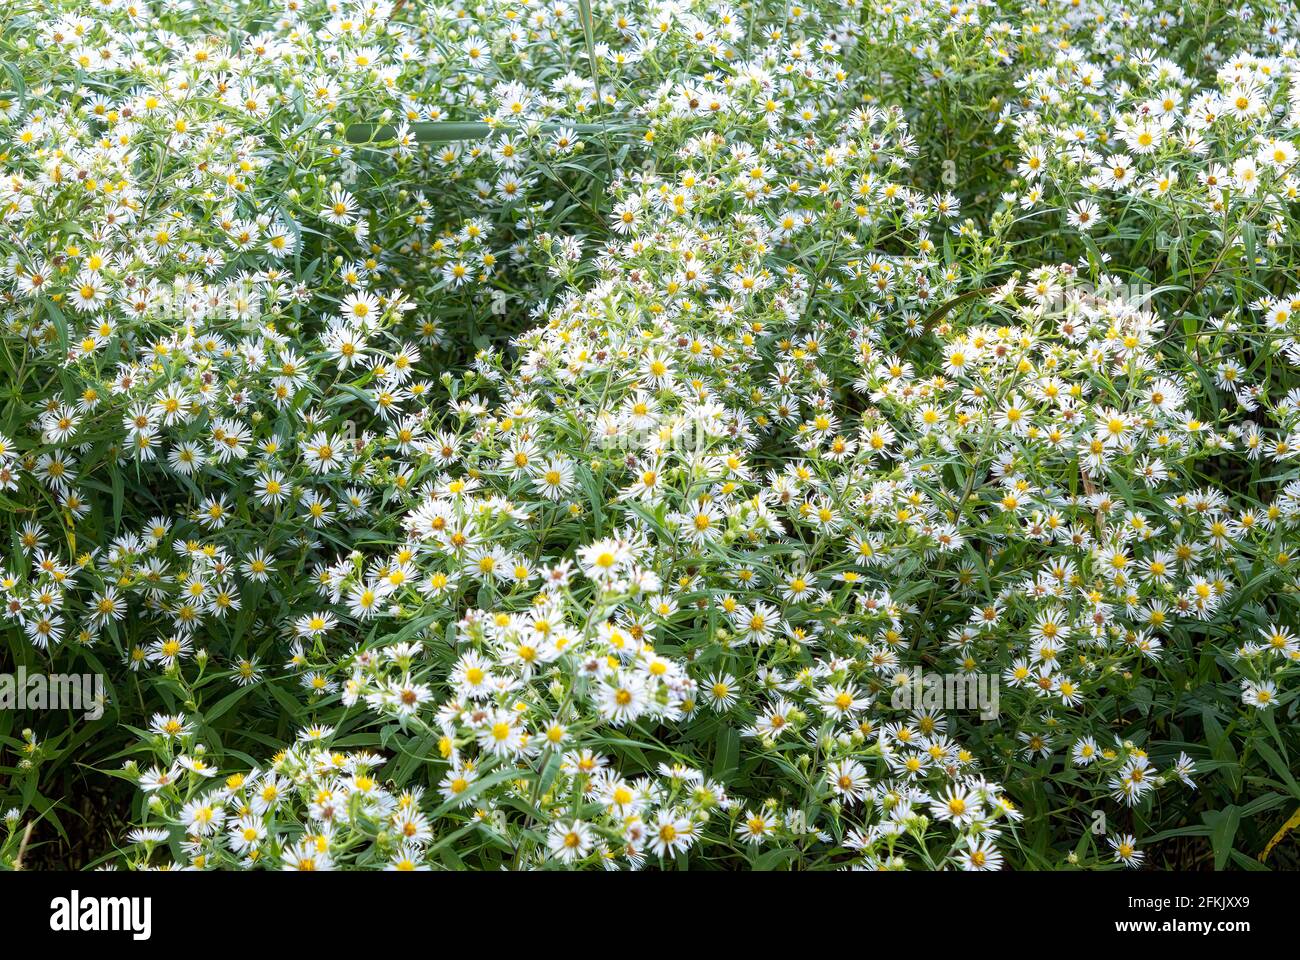 Field Of White Daisies Wild Flowers Stock Photo